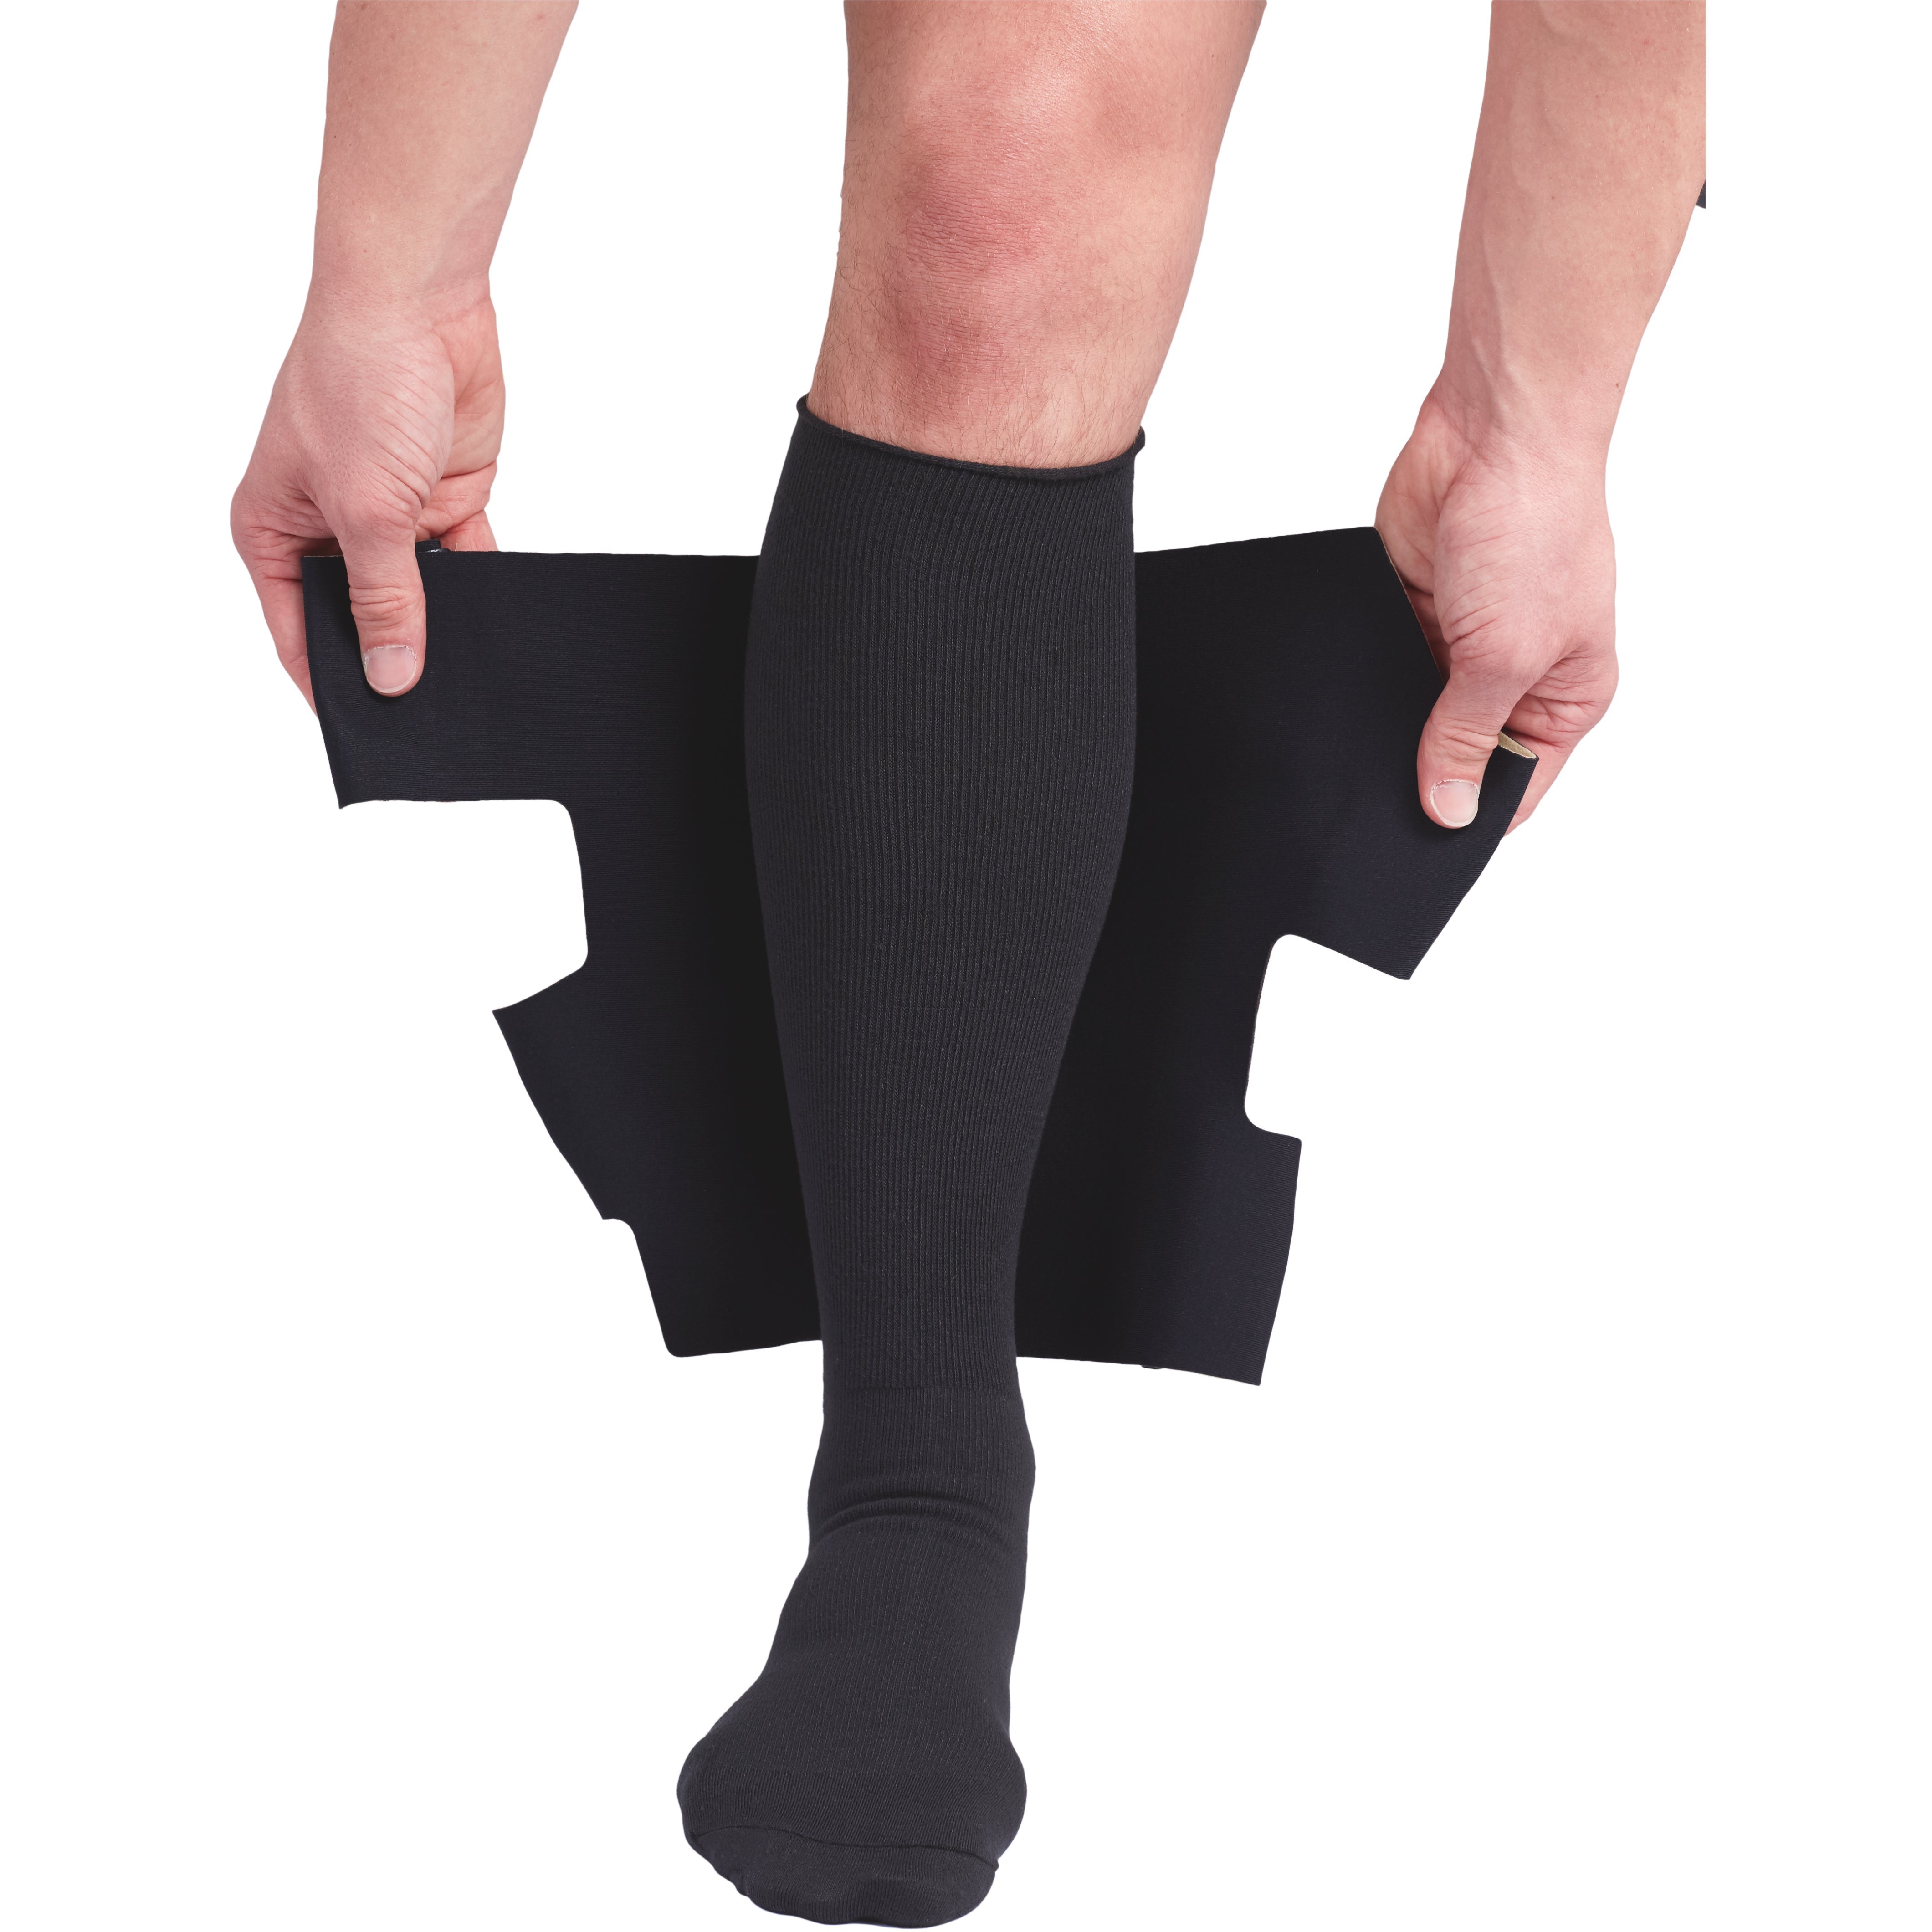 circaid®️ juxtafit®️ Essentials Lower Leg with Compressive Anklets